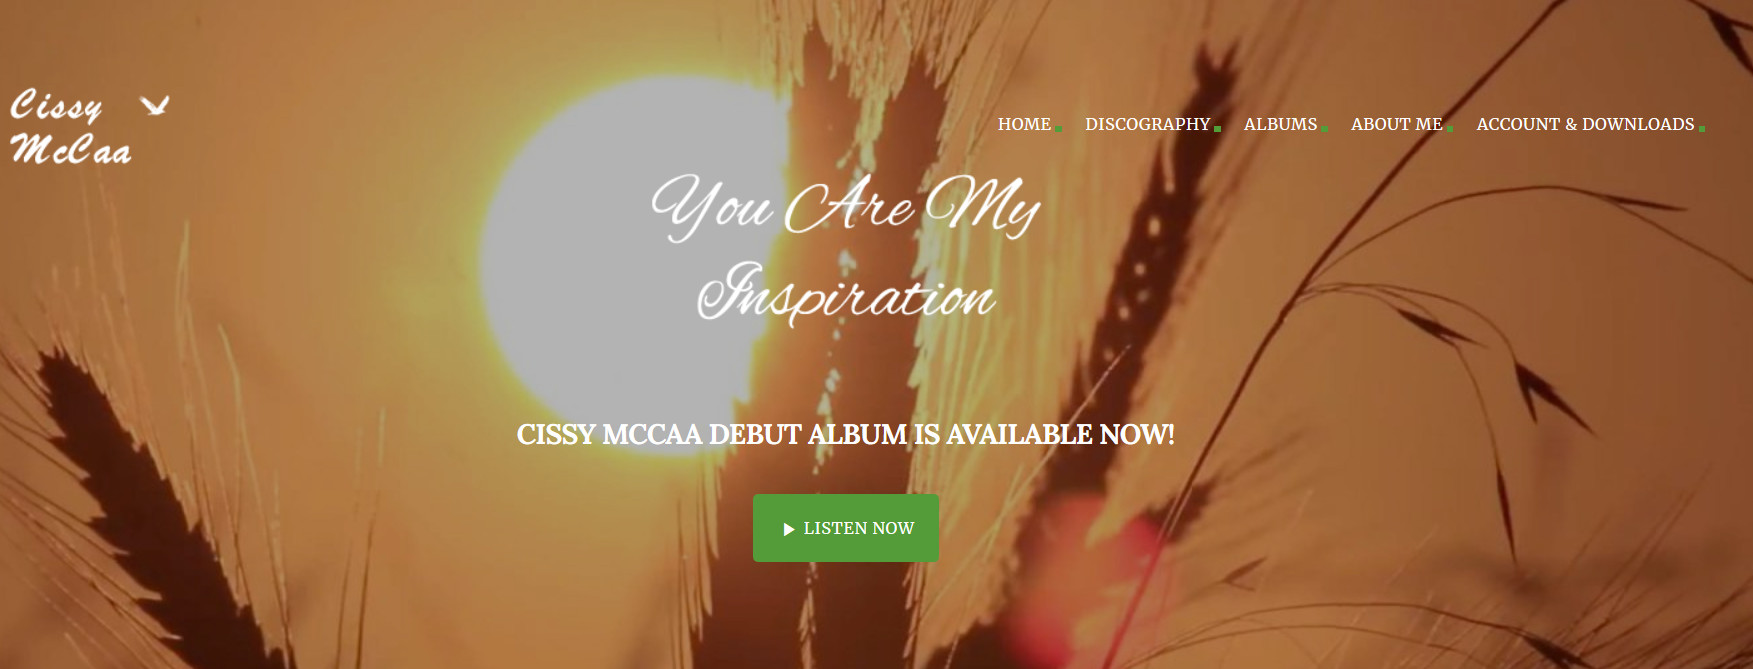 Cissy McCaa - Gospel & Country Singer, Music Artist